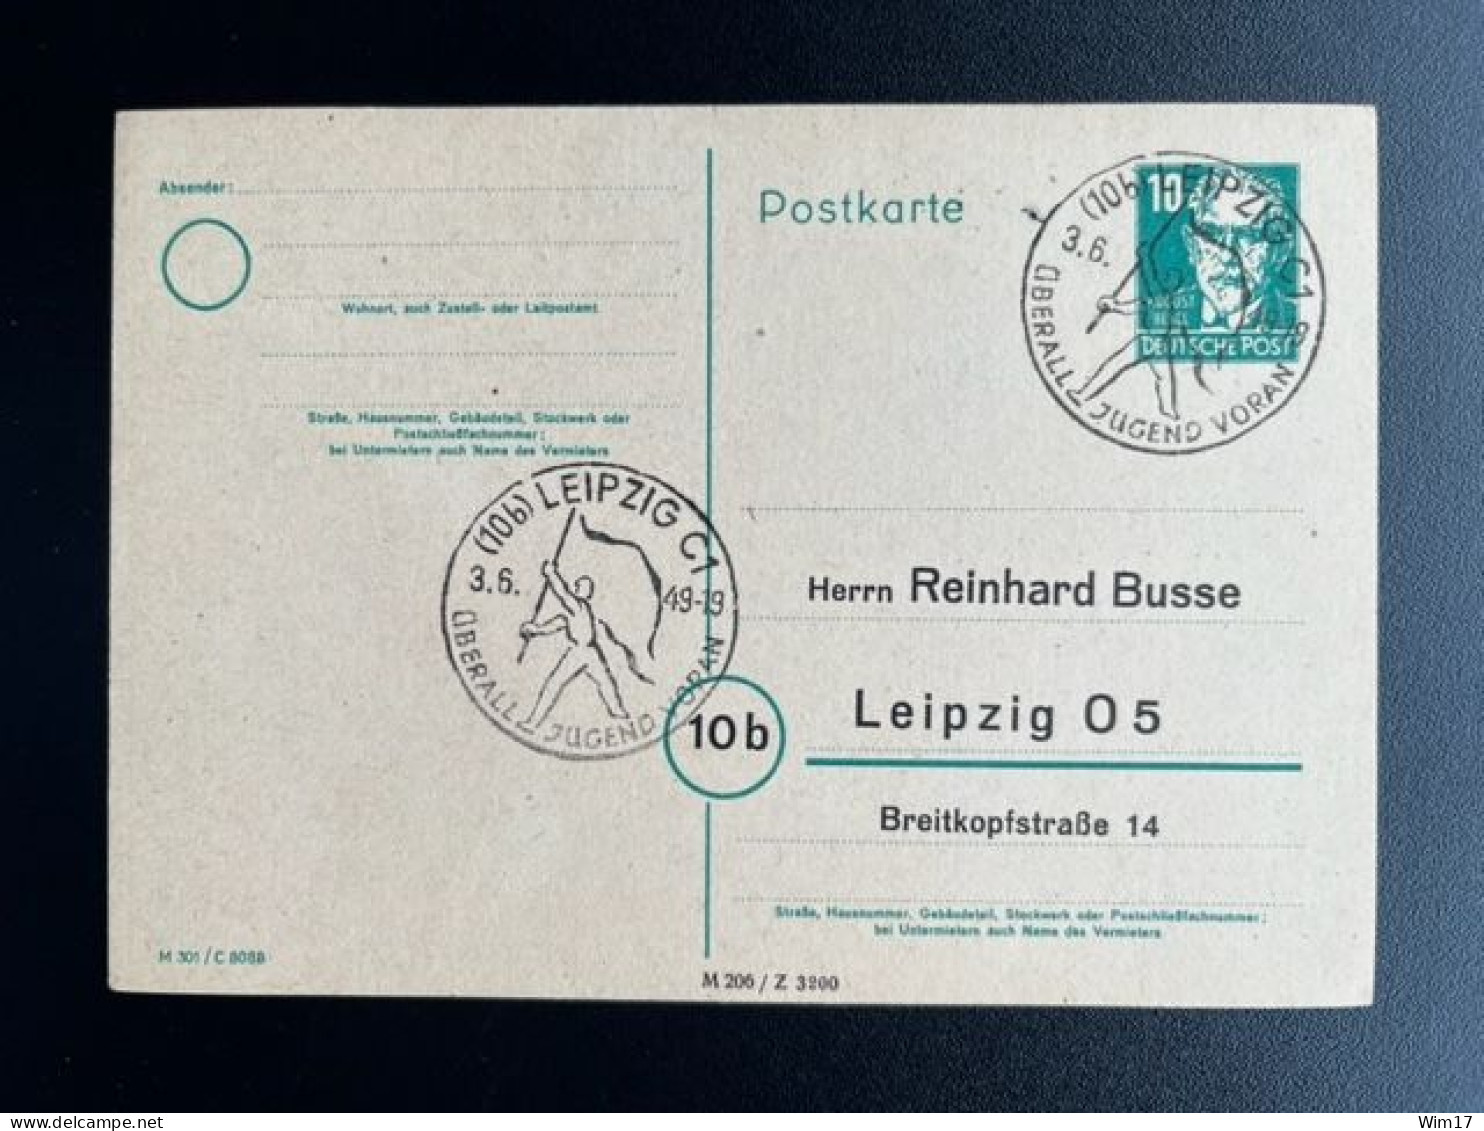 GERMANY 1949 POSTCARD LEIPZIG 03-06-1949 DUITSLAND DEUTSCHLAND SST UBERALL JUGEND VORAN - Entiers Postaux